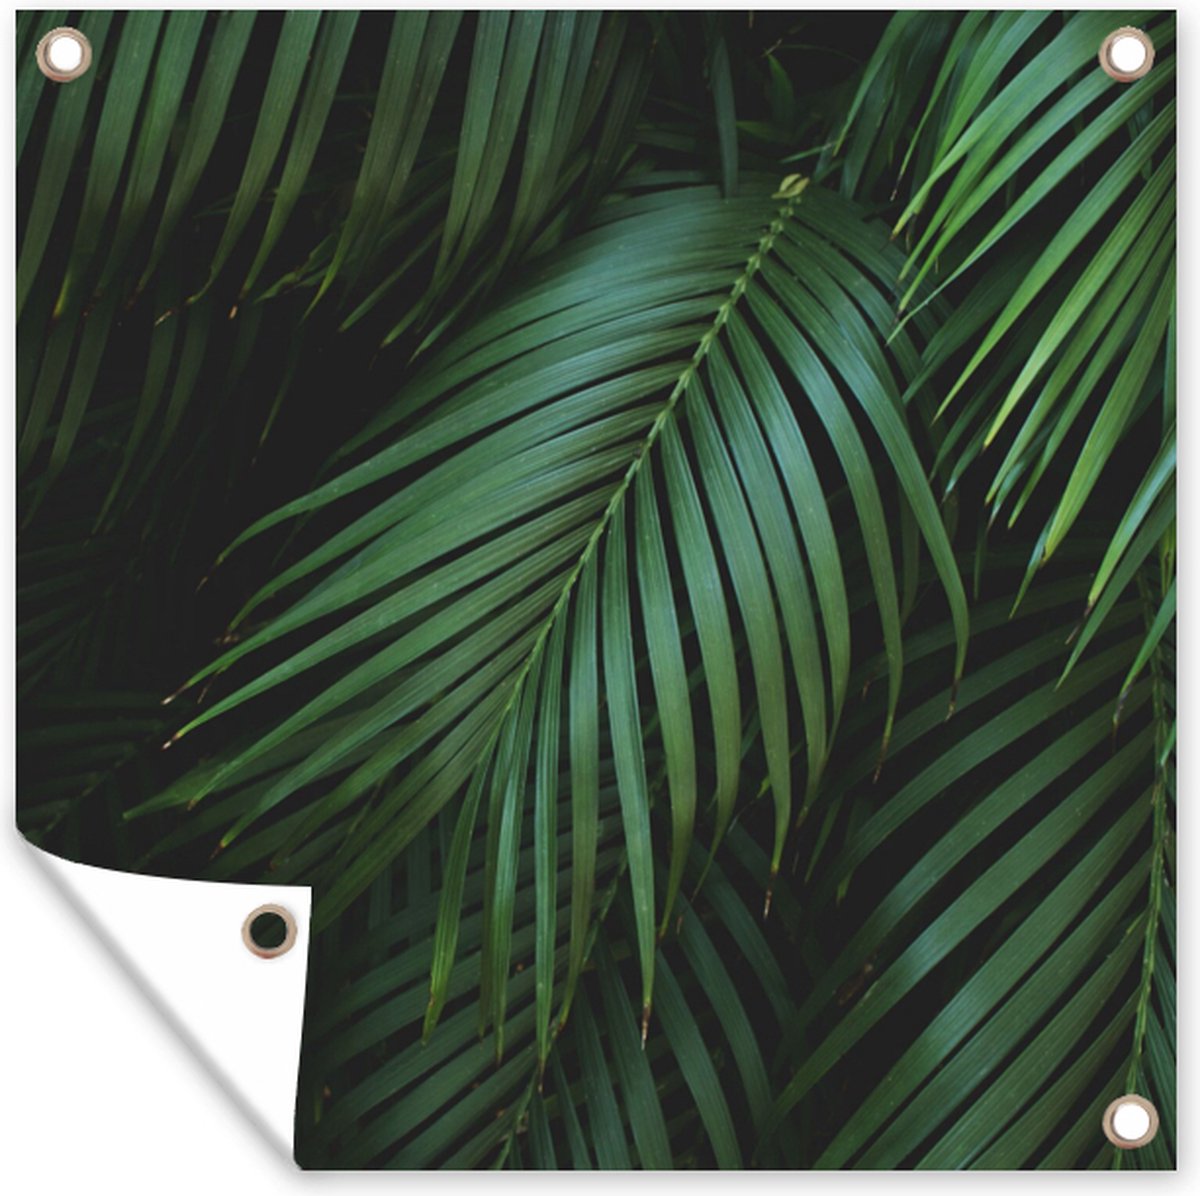 Tuinposter - Palmbladeren - Bladeren - Tropical - Donker - 200x200 cm - Tuindecoratie - Tuindoek